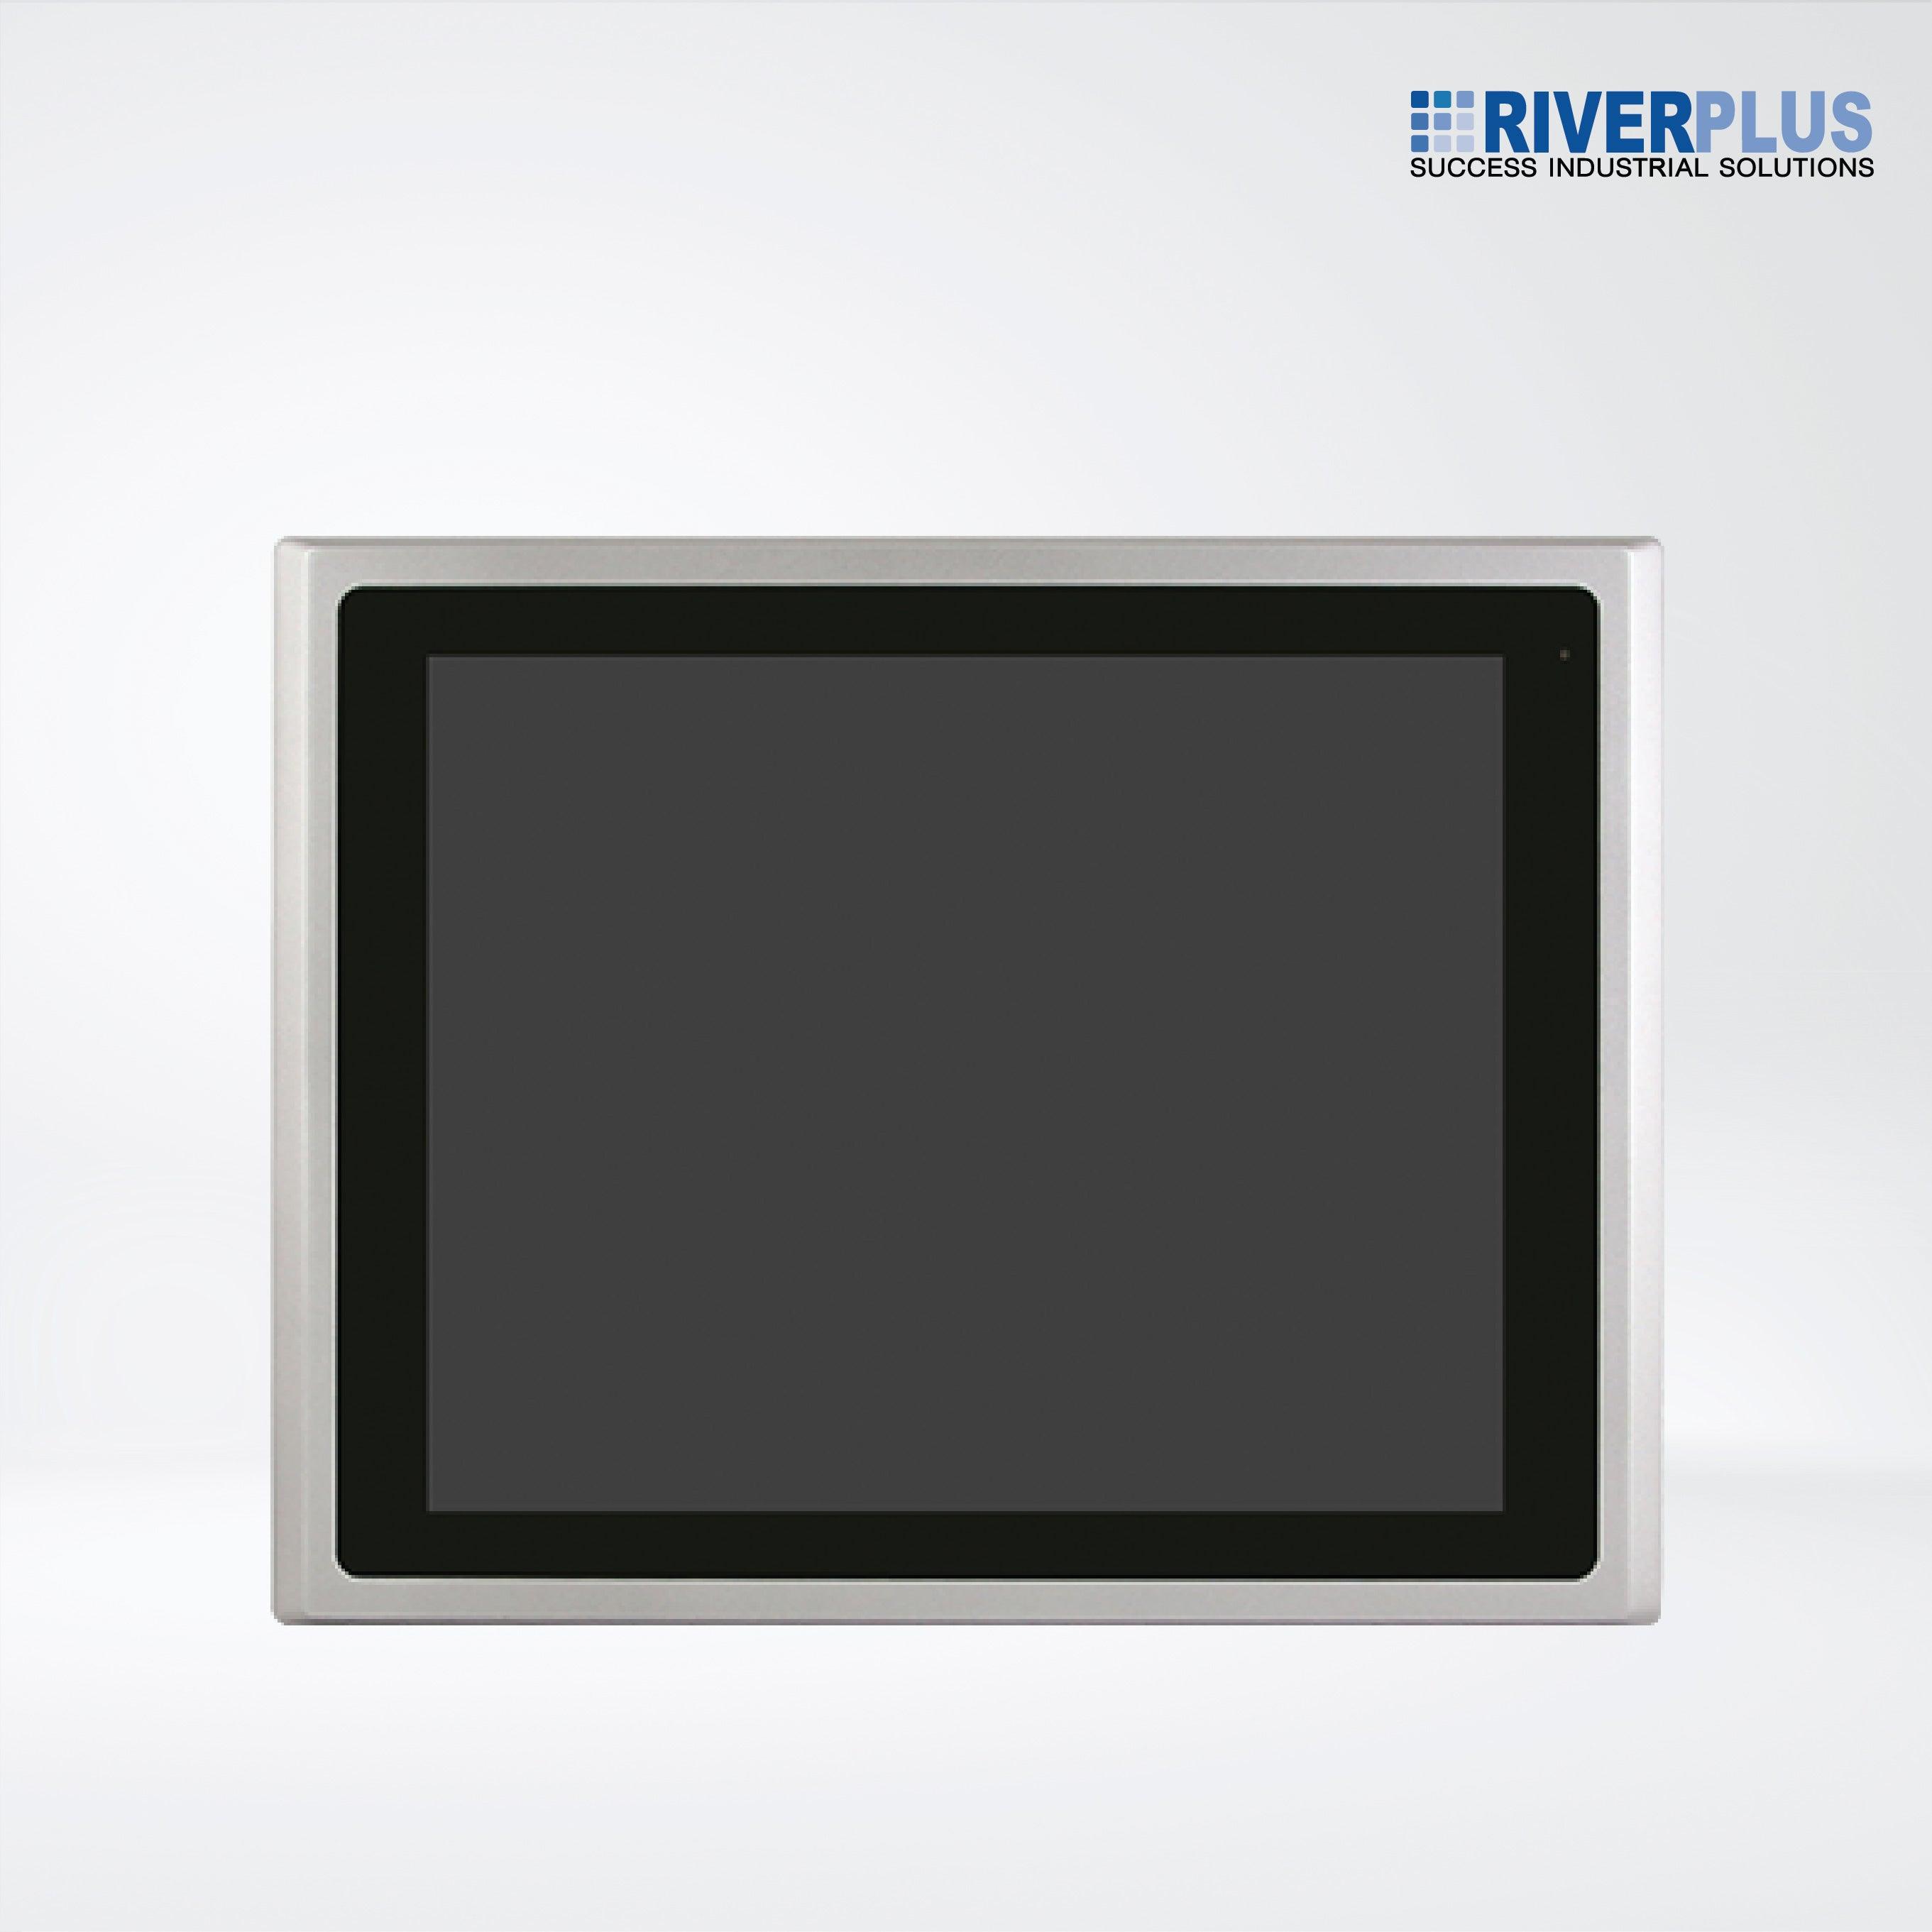 ARCHMI-917BP 8th Gen. Intel Core i3/i5, Fanless Industrial Compact Size Panel PC - Riverplus